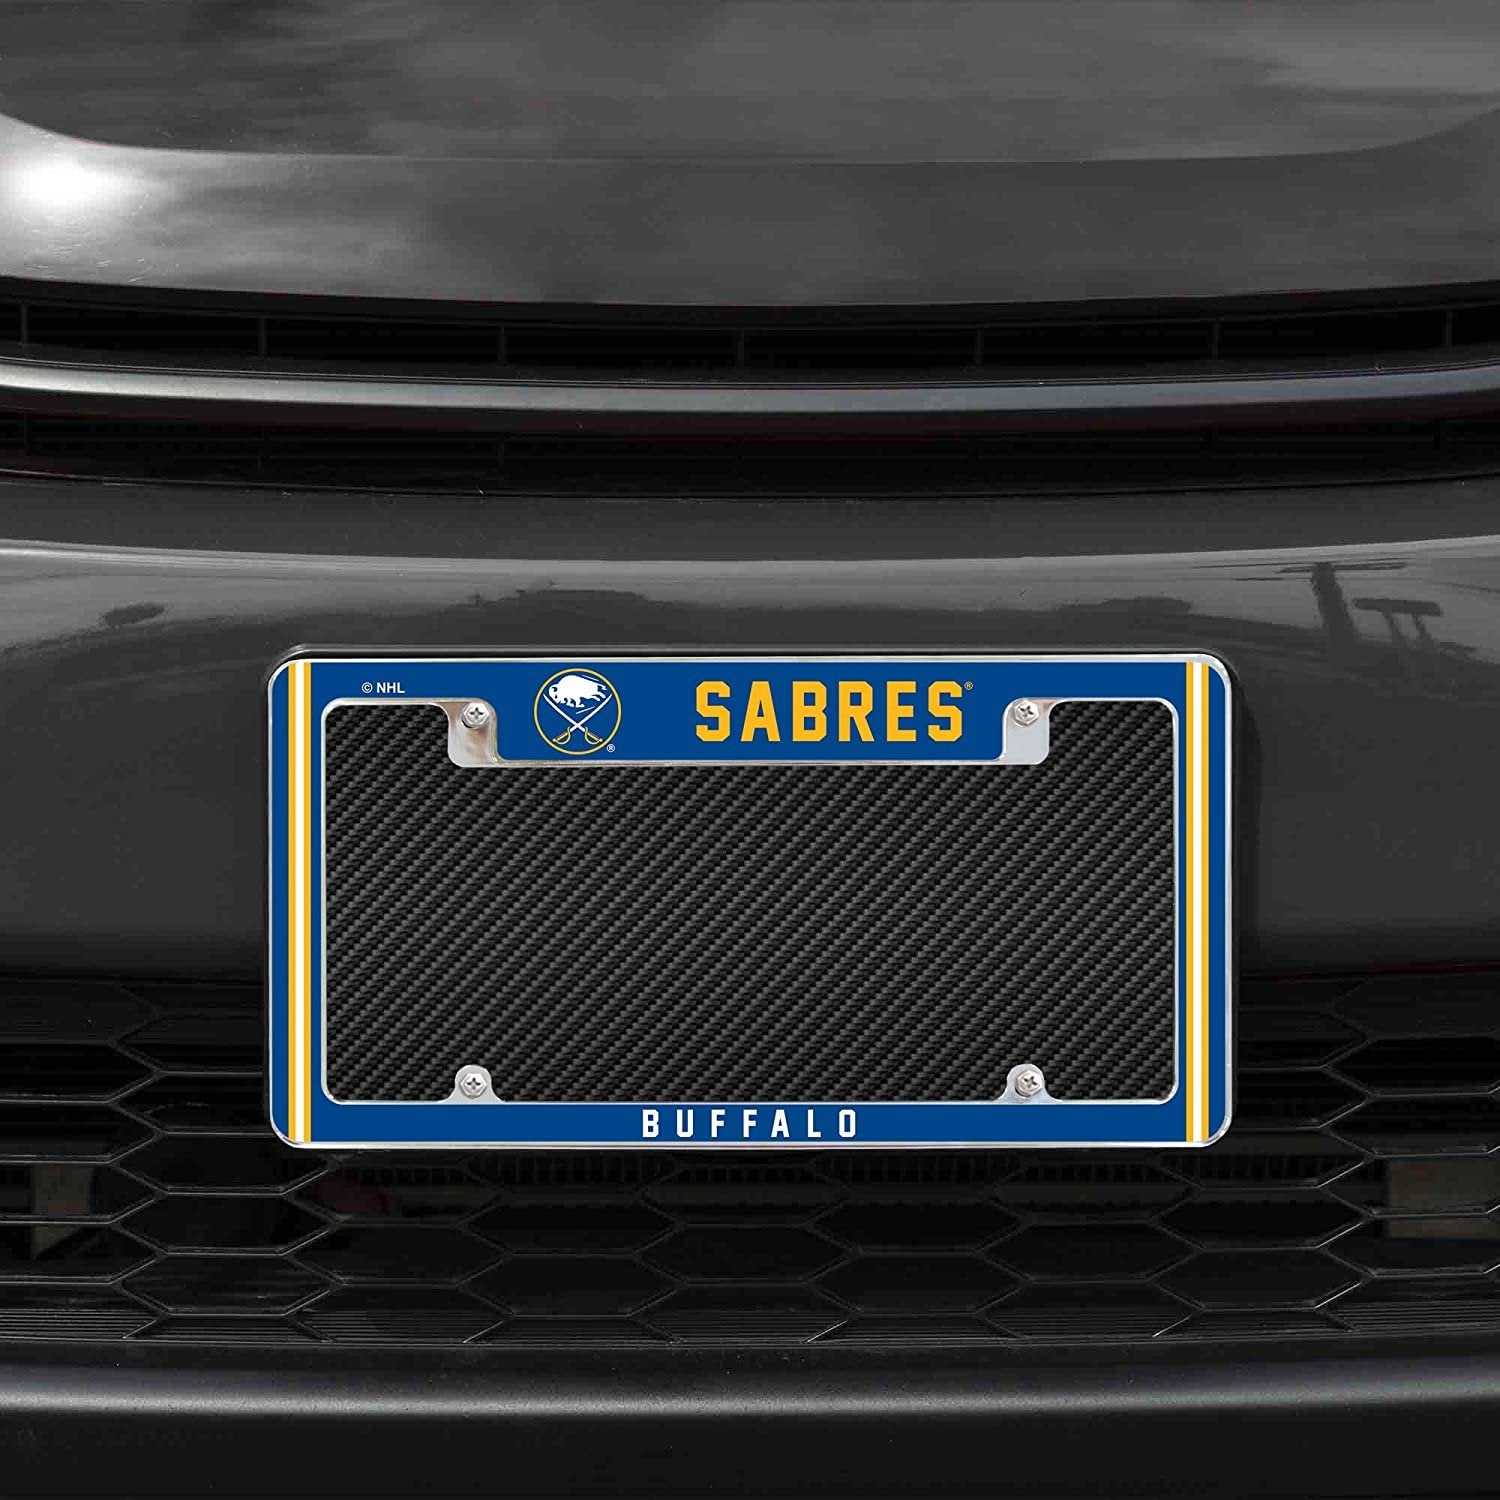 Buffalo Sabres Metal License Plate Frame Chrome Tag Cover Alternate Design 6x12 Inch